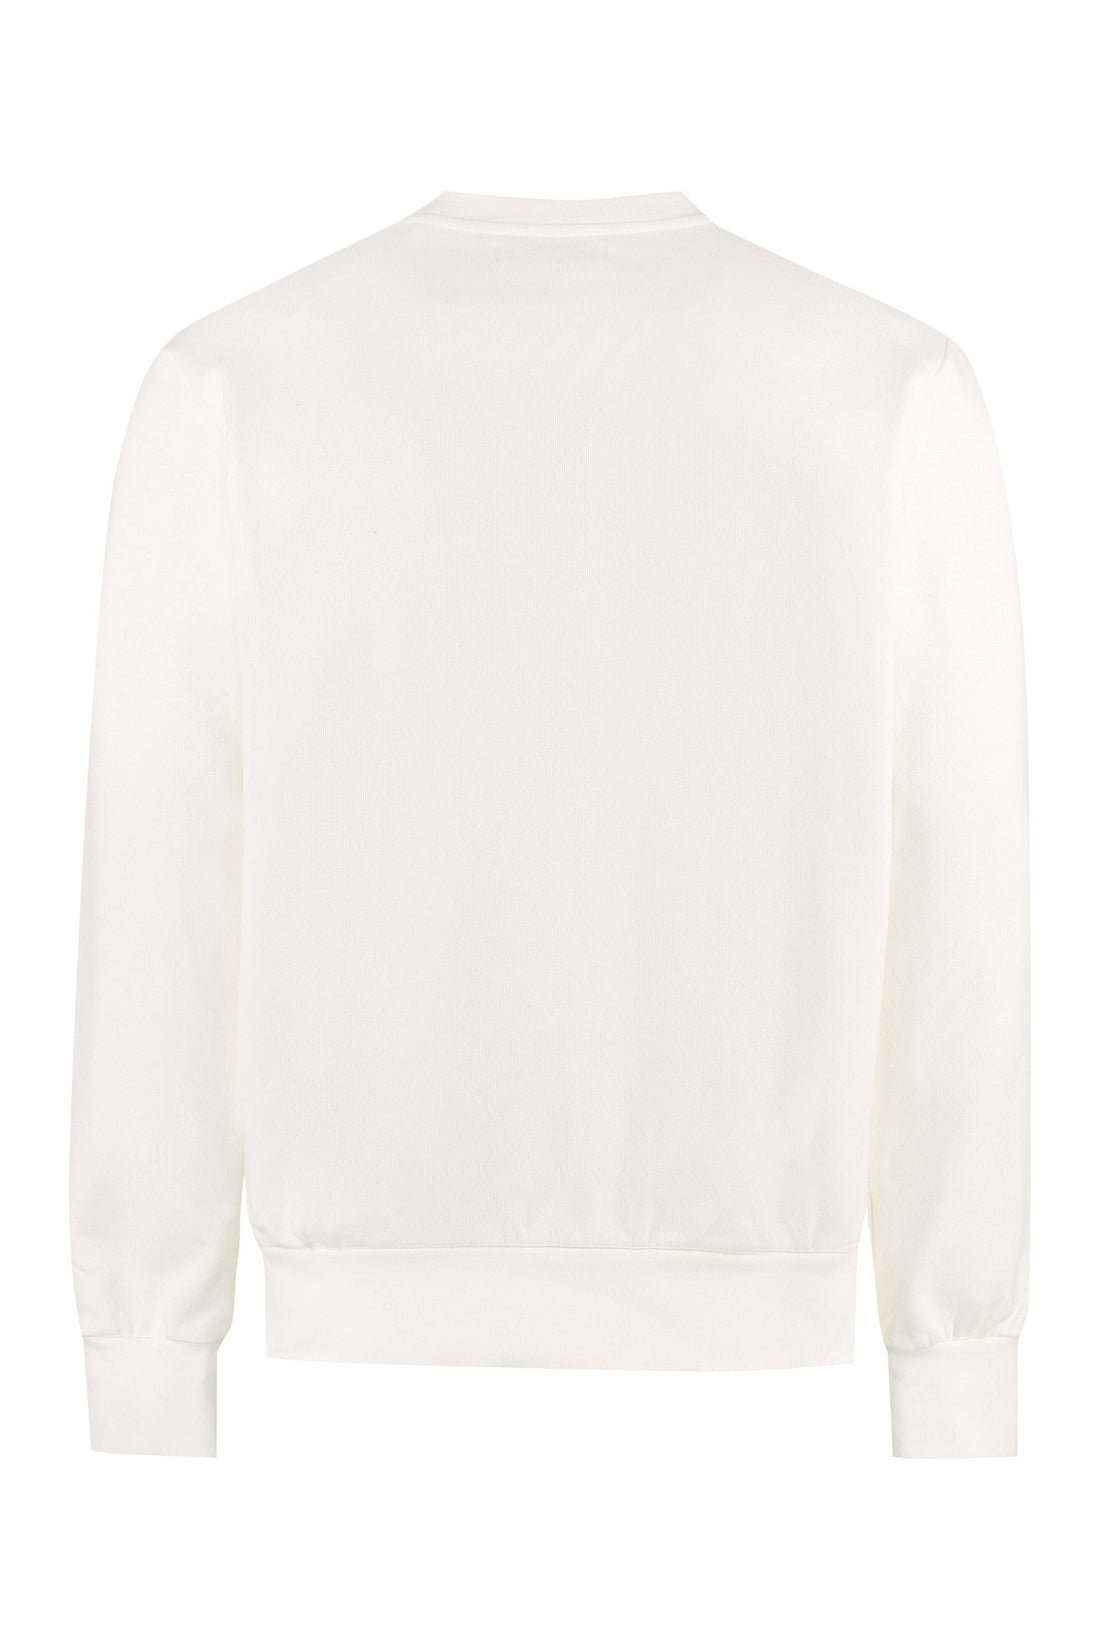 Vilebrequin-OUTLET-SALE-Printed cotton sweatshirt-ARCHIVIST